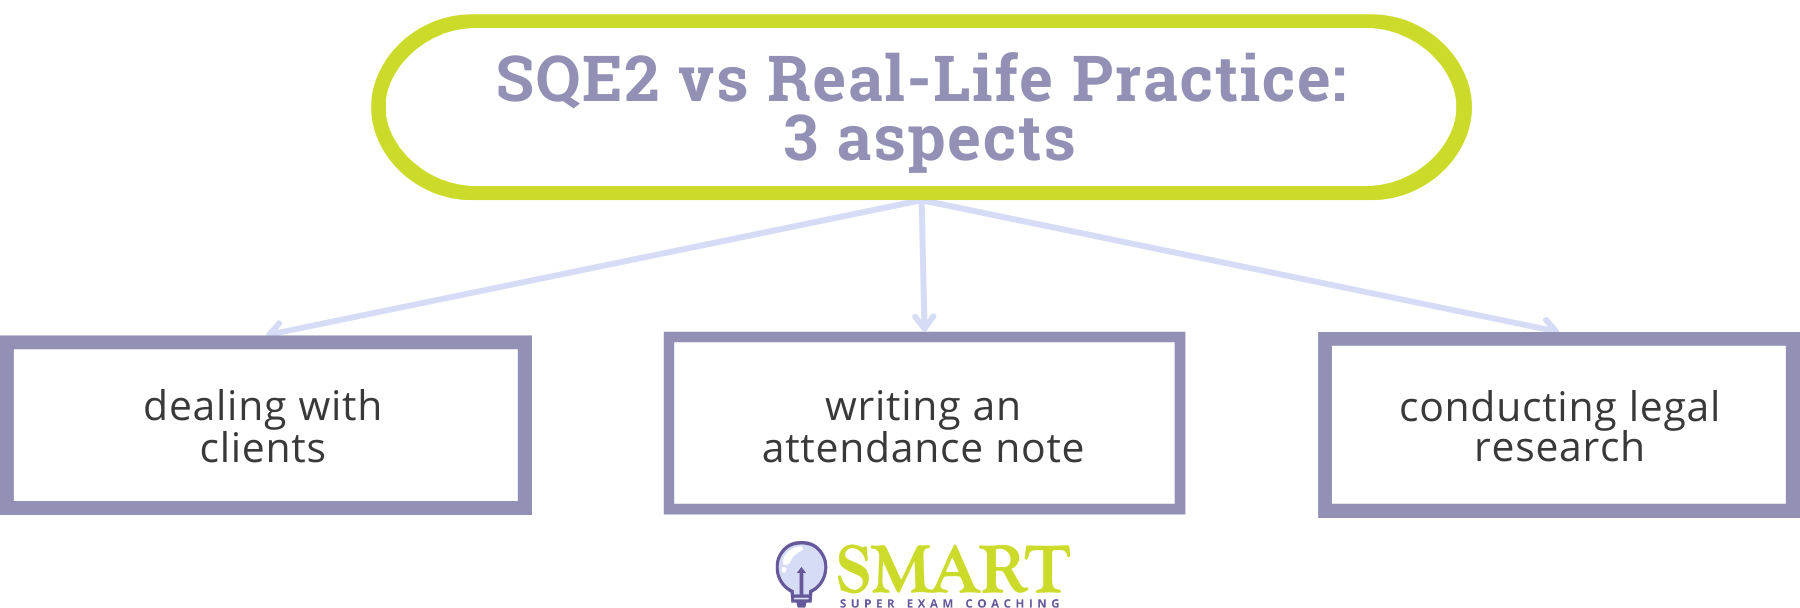 SQE2 vs Real-Life Practice